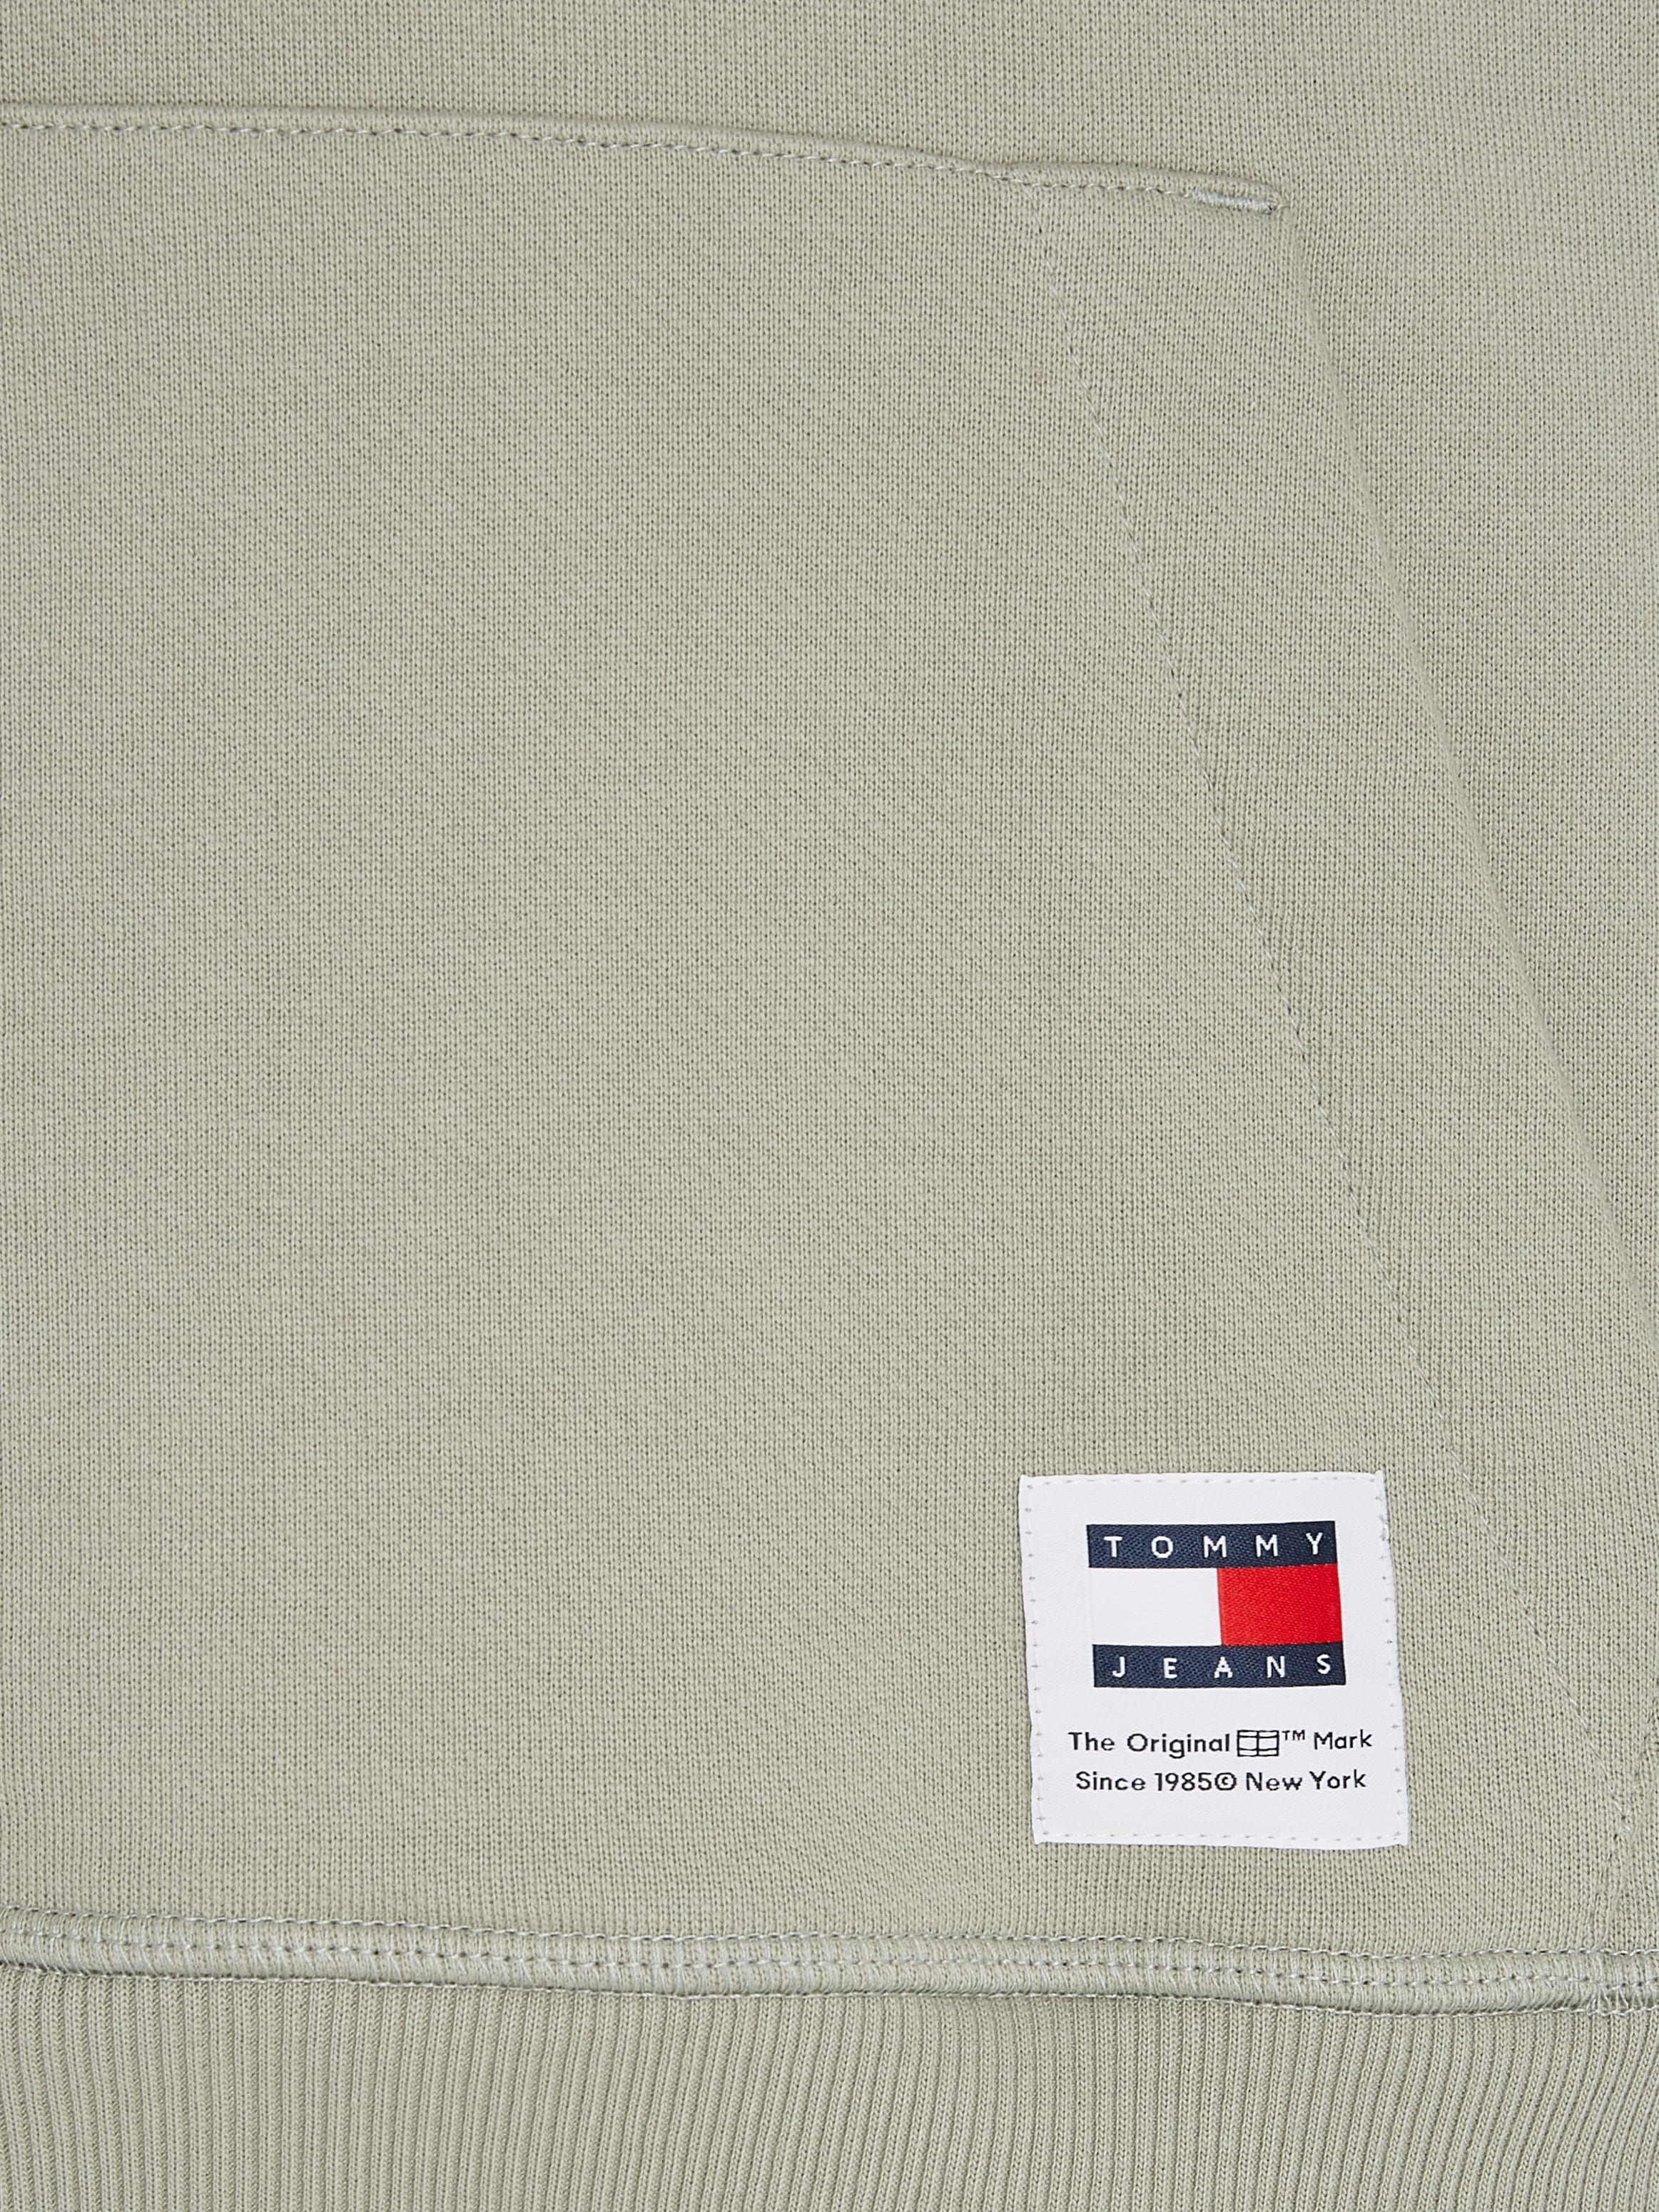 Tommy Jeans Kapuzensweatshirt »TJM REG BOLD CLASSICS HOODIE EXT«, mit Logodruck auf der Brust